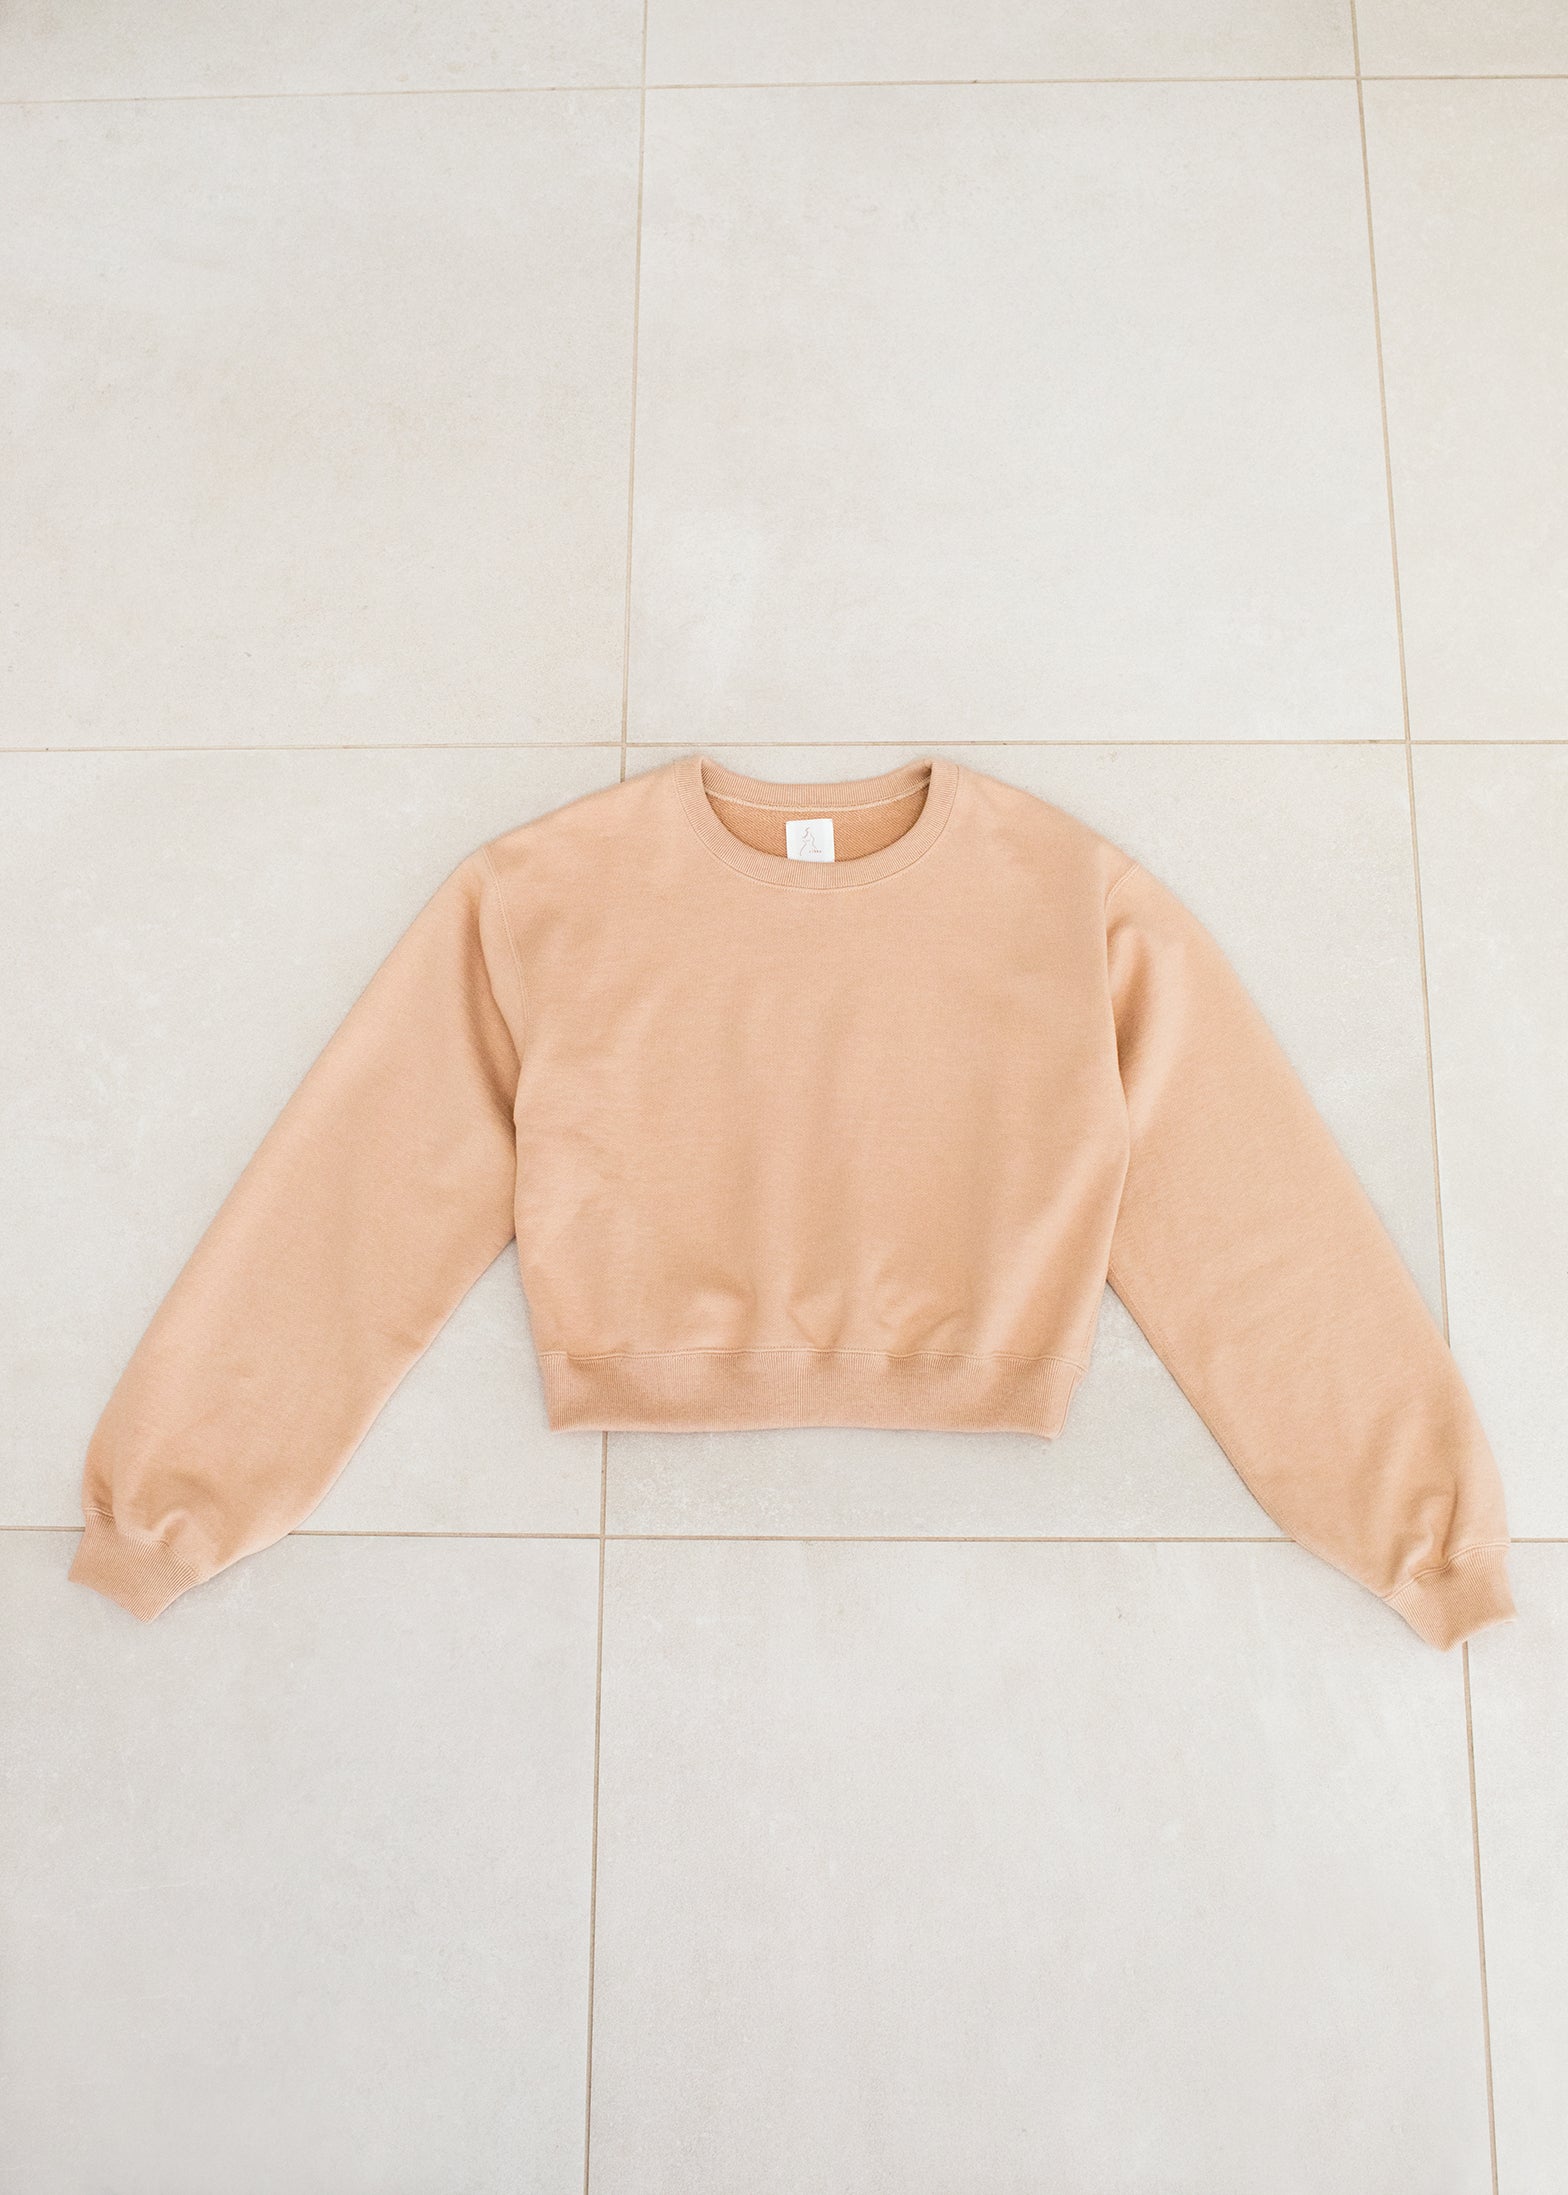 calm / sweatshirt | rihka